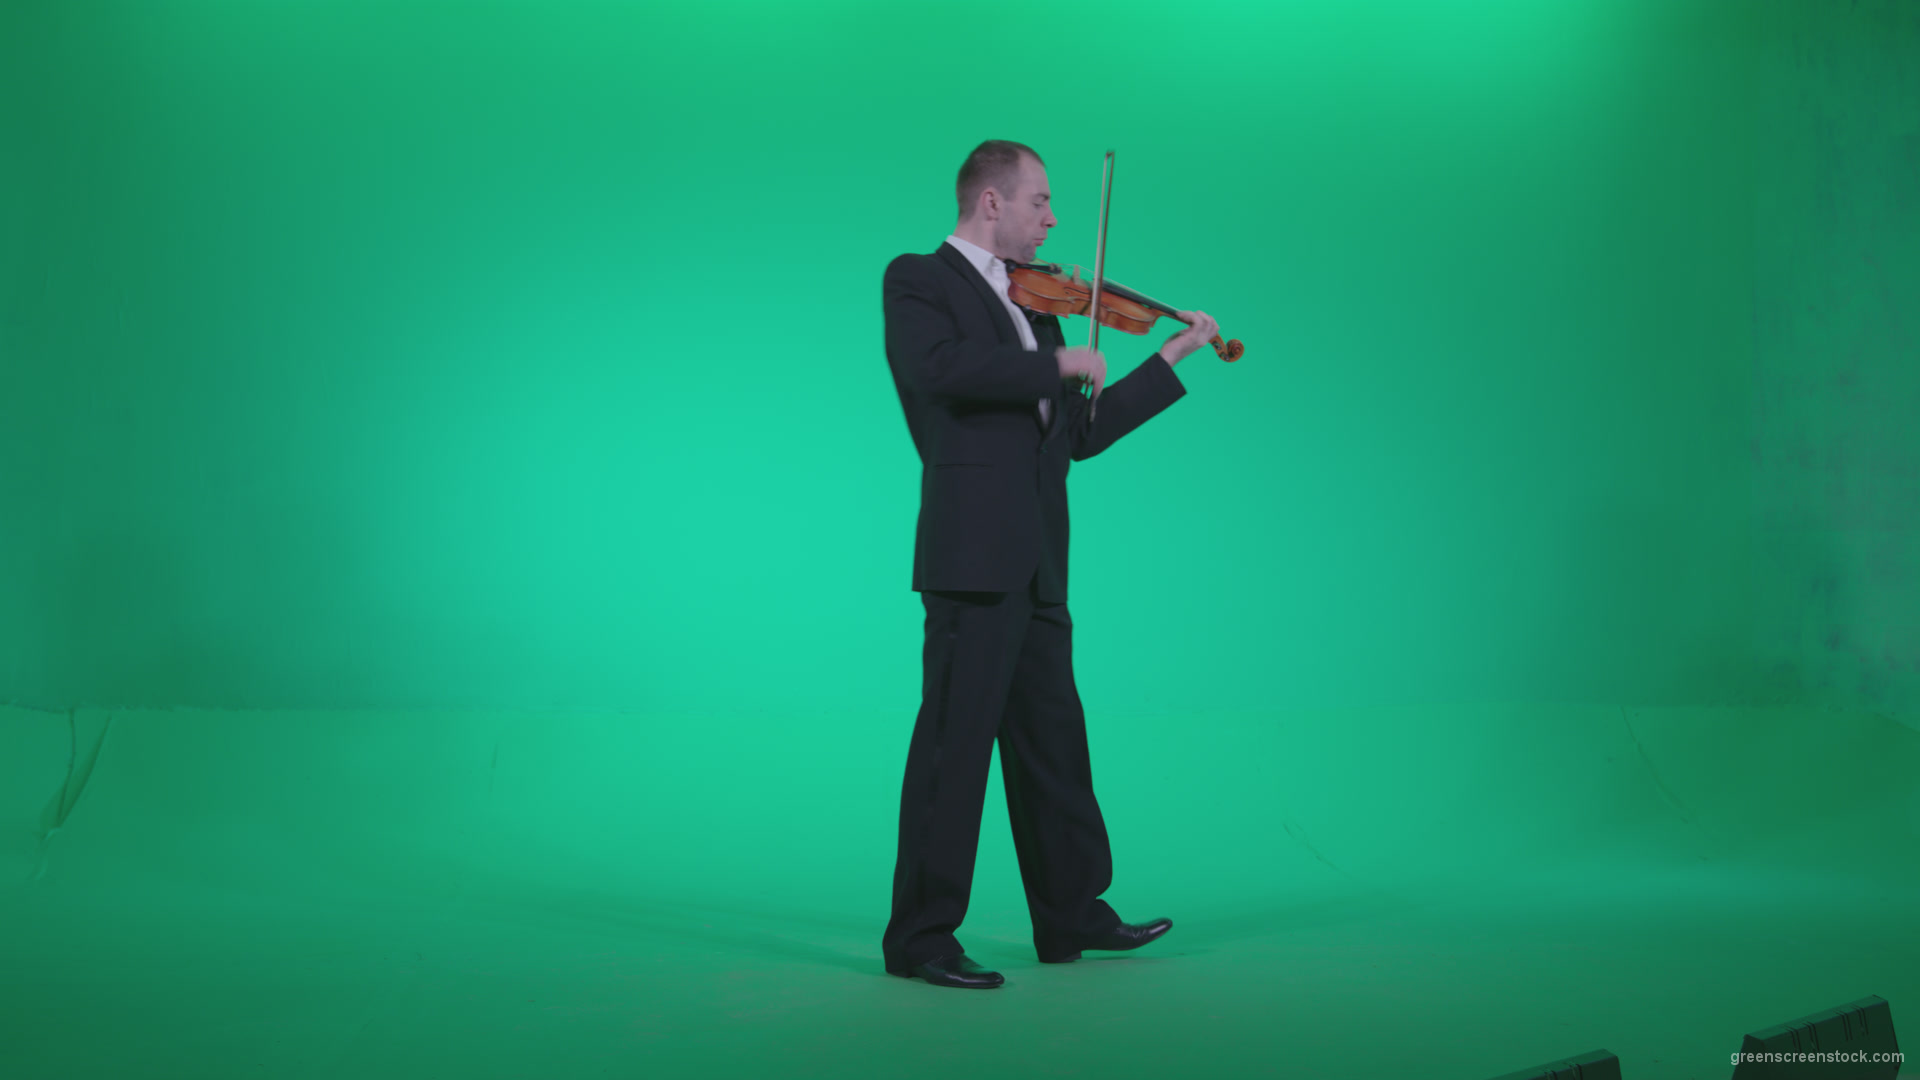 Professional-Violin-player-man-z3_008 Green Screen Stock